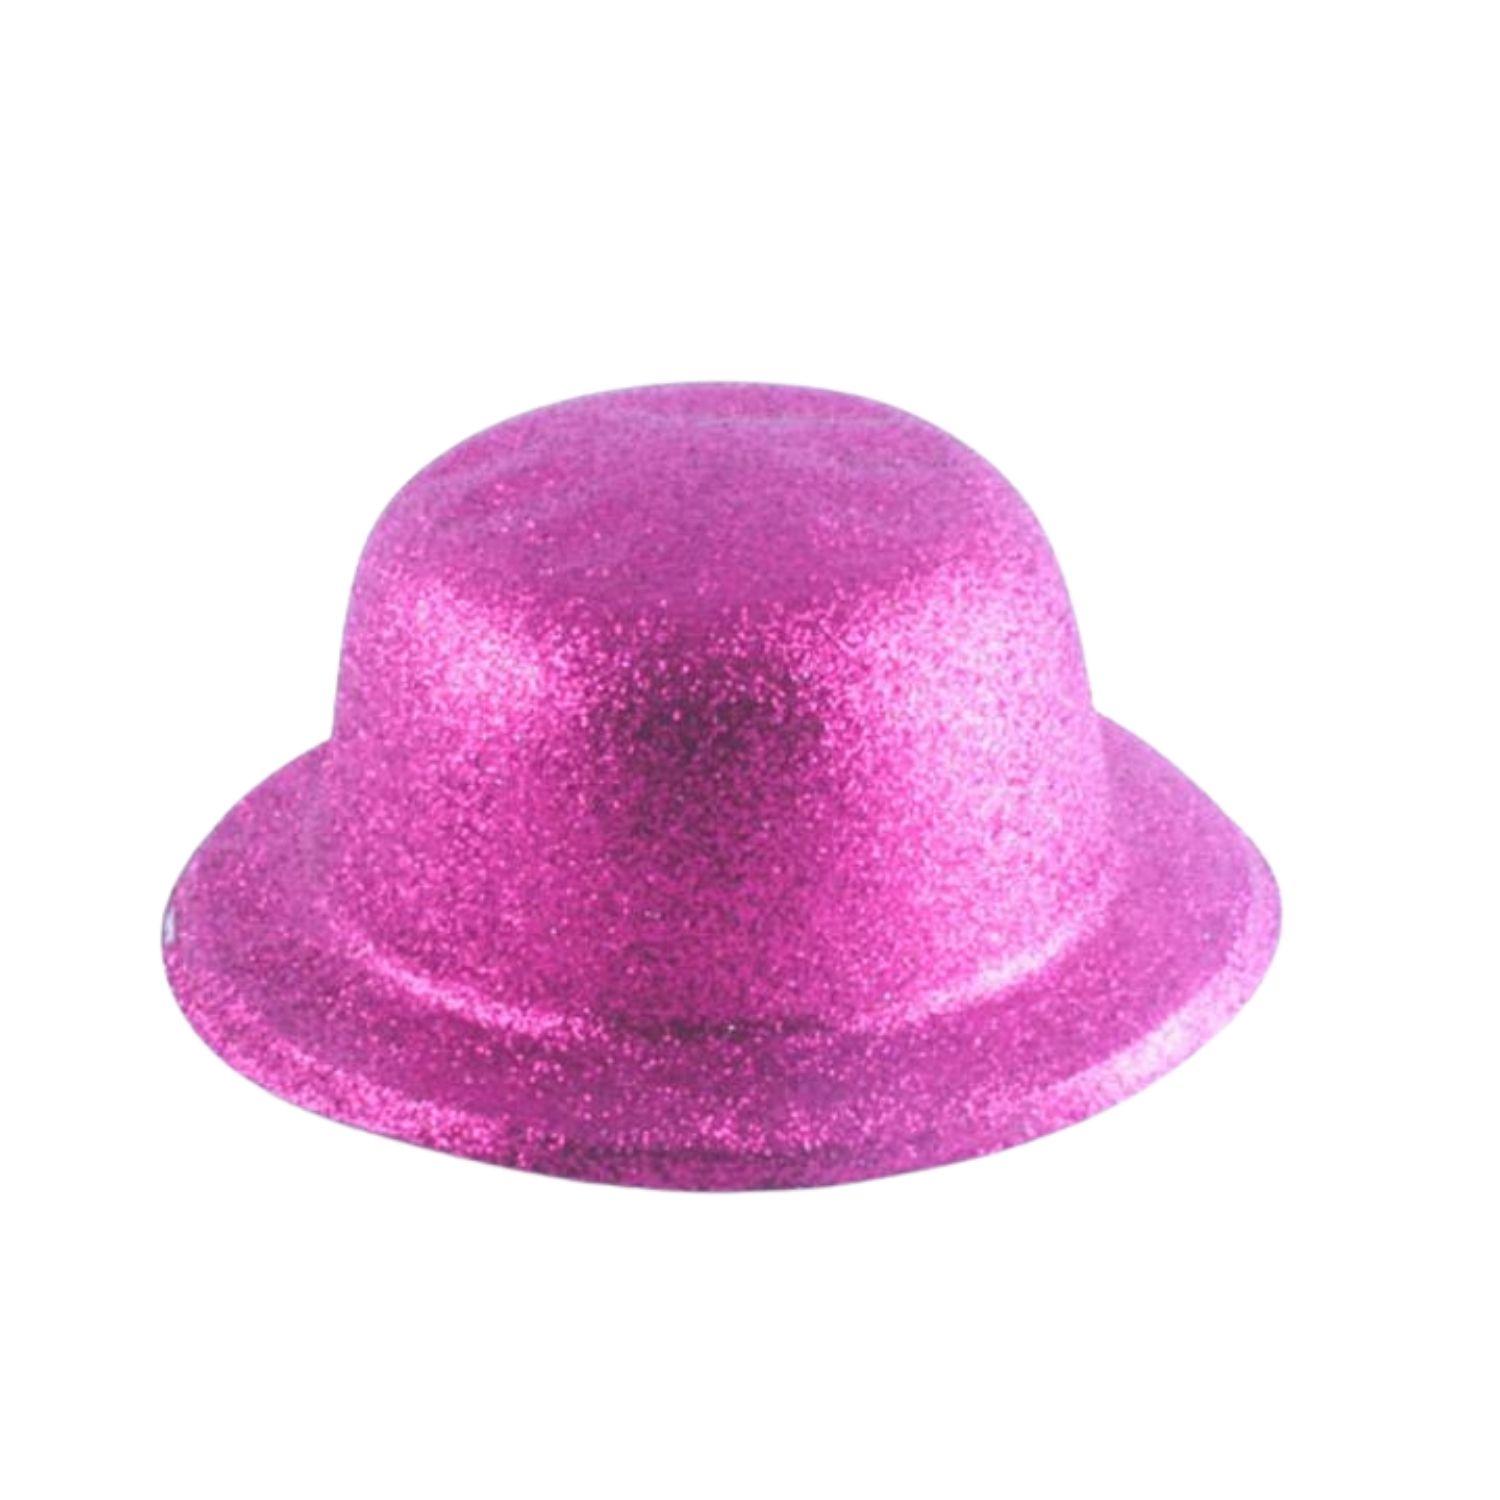 Cerise Glitter Bowler Hat